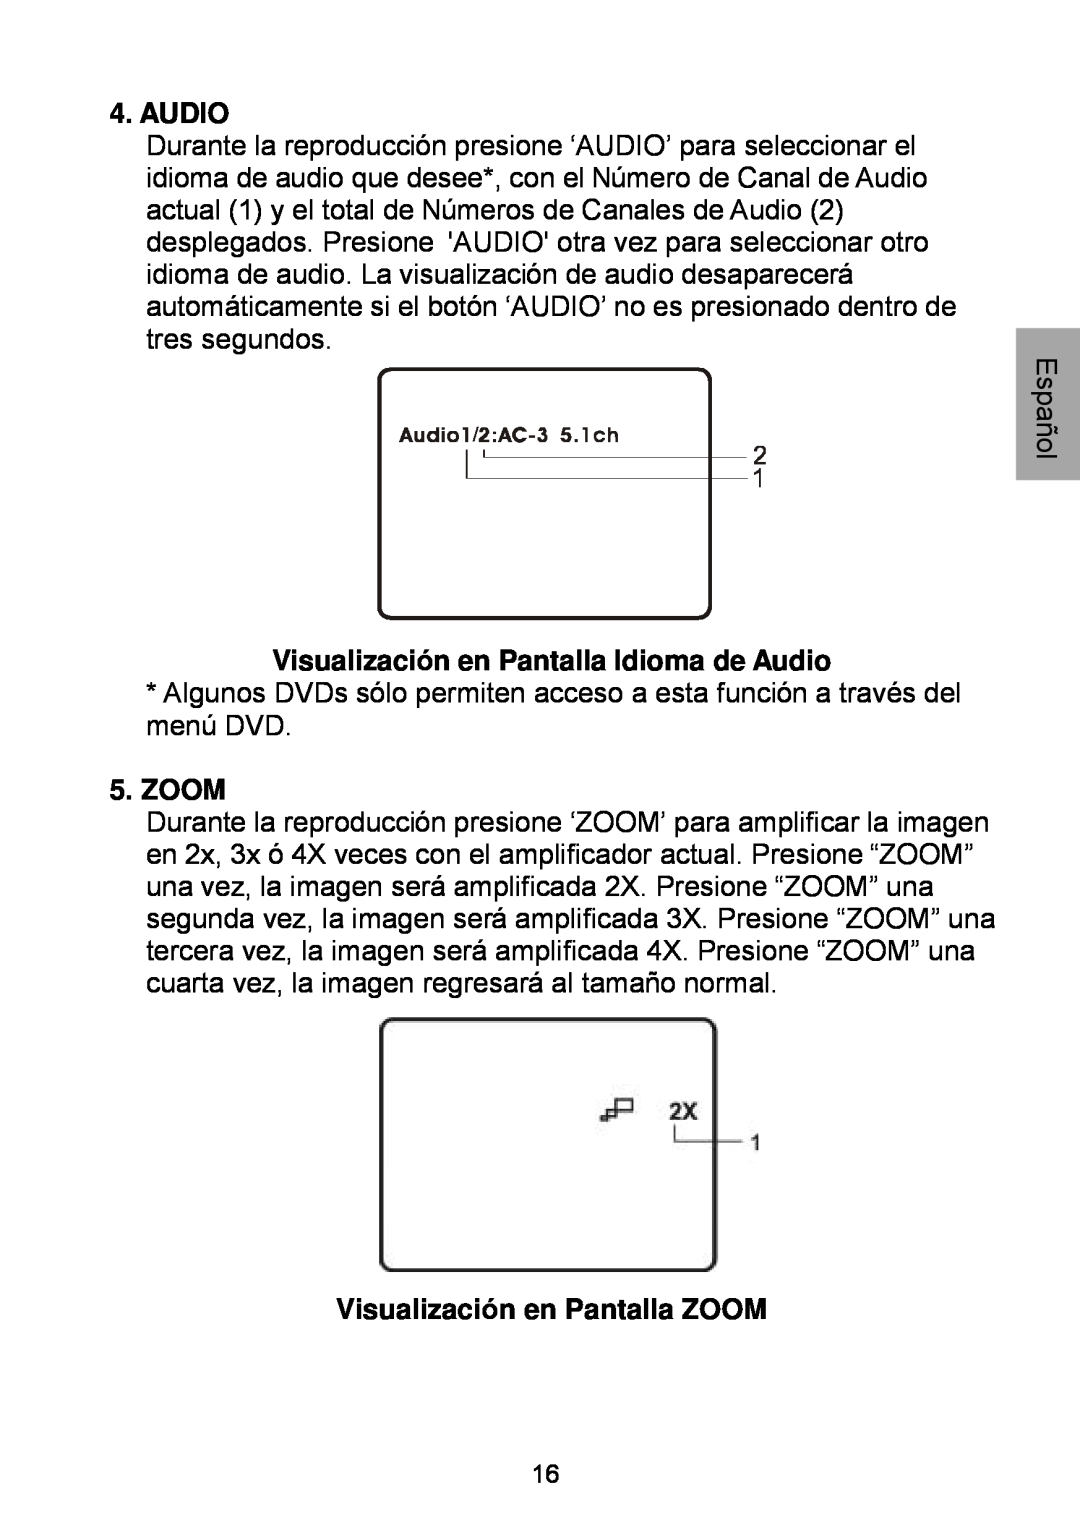 Audiovox D1929B manual Visualización en Pantalla Idioma de Audio, Zoom, Visualización en Pantalla ZOOM 